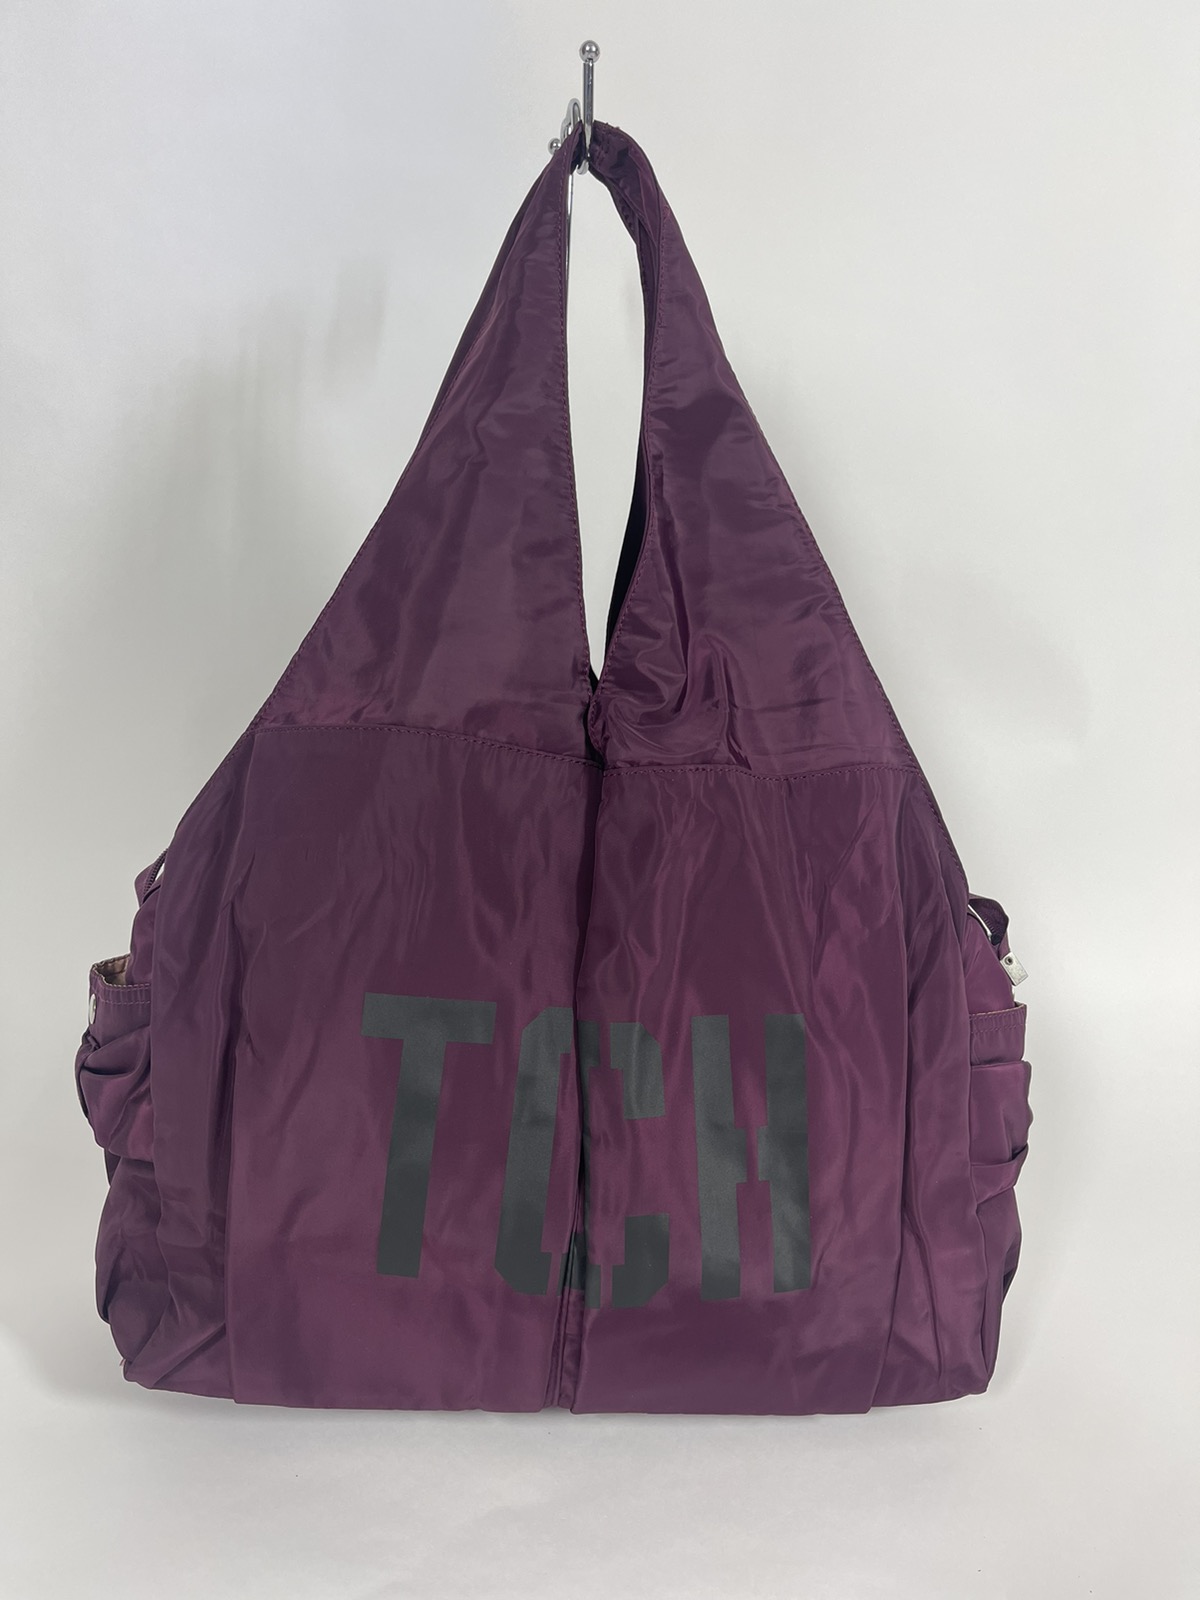 Дорожная сумка женская Bobo 1130 темно-фиолетовая, 45х30х20 см